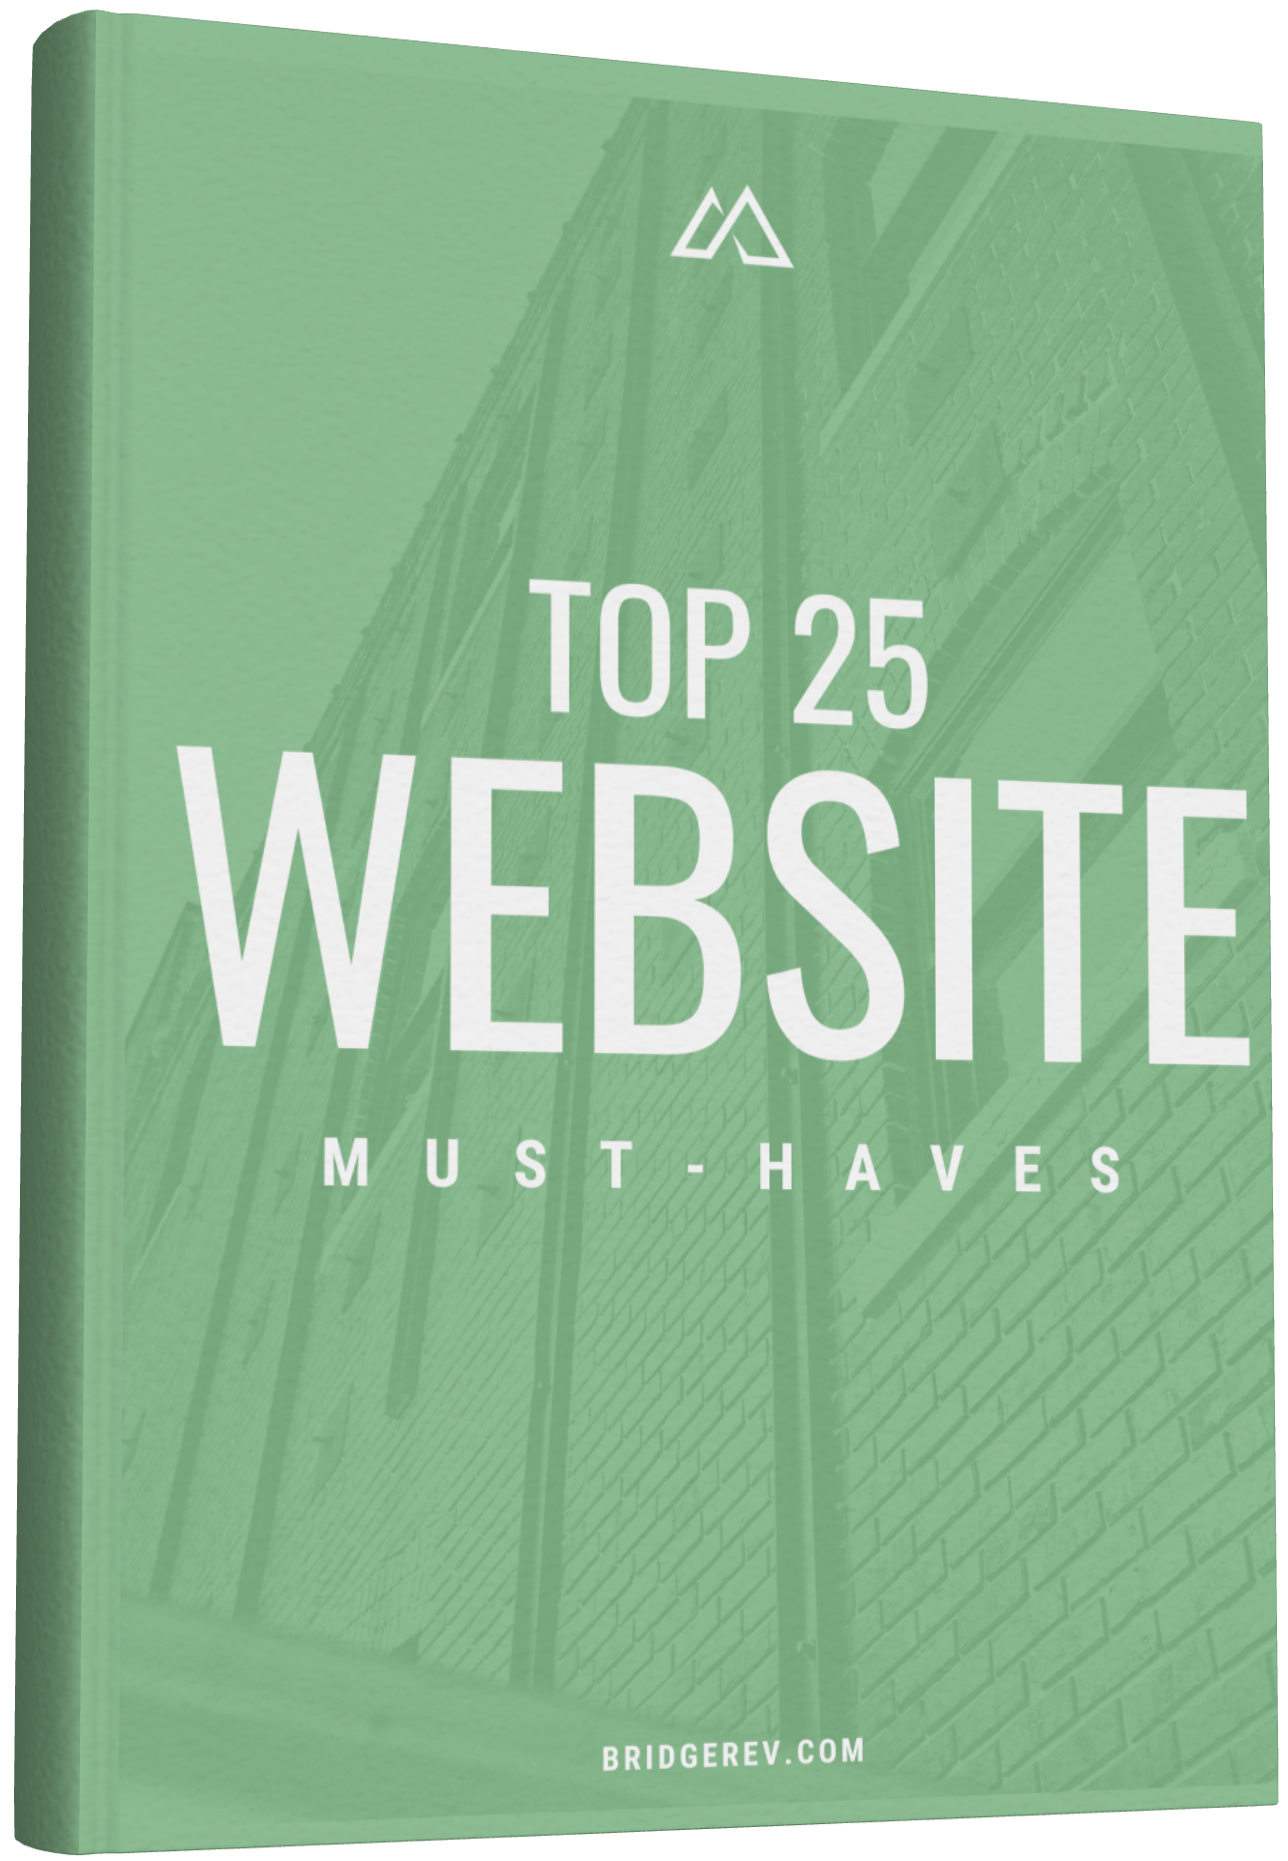 Offer - Top 25 Website Must Haves